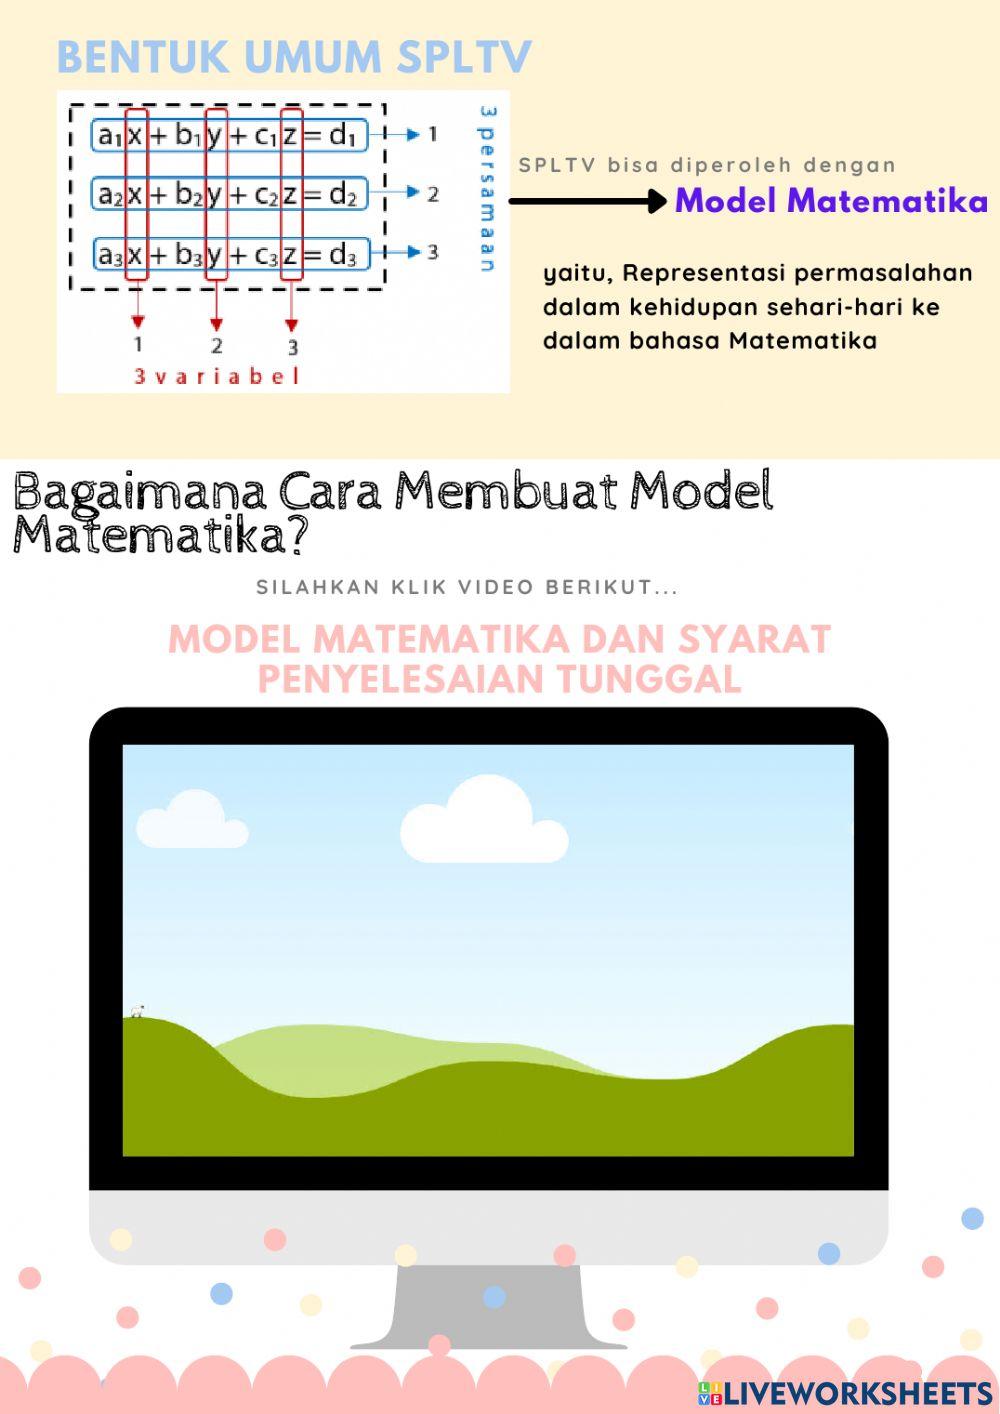 Model Matematika SPLTV